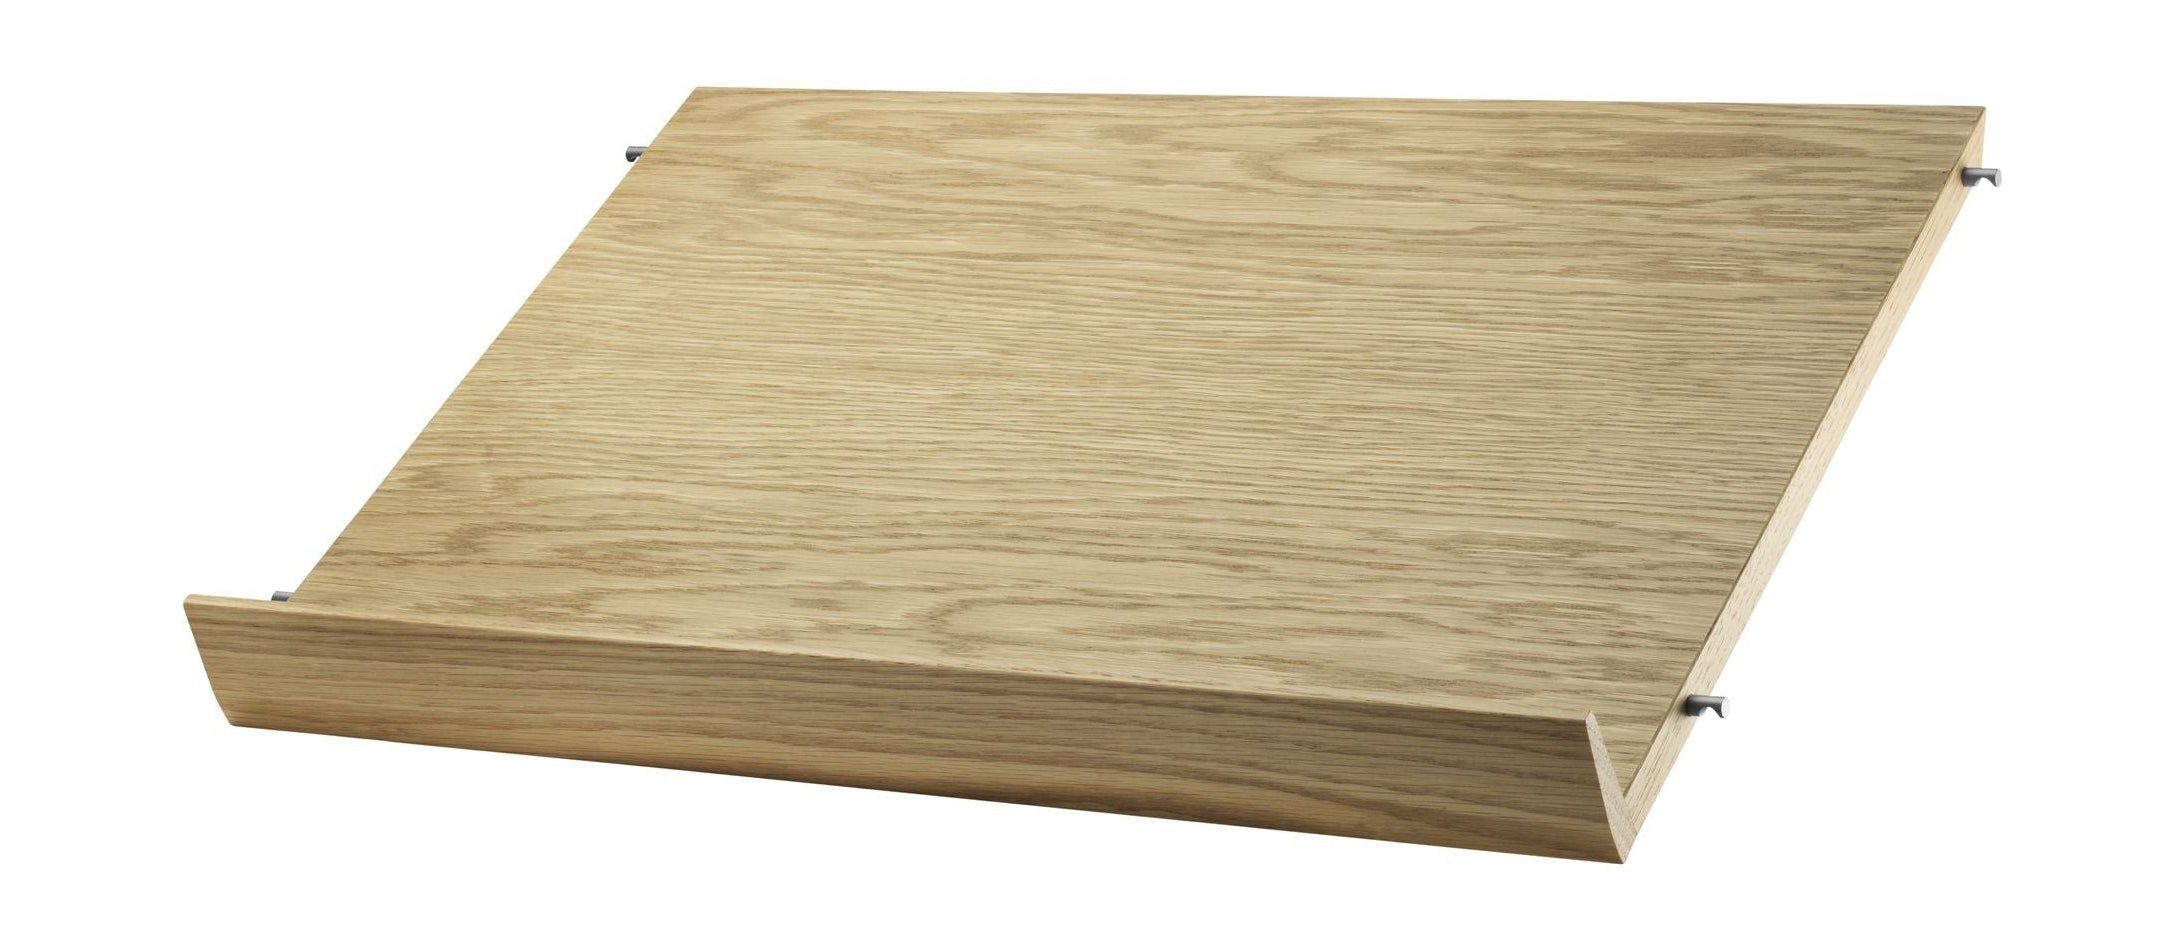 Strengmøbler String System Magazine Tray Wood Oak, 30x58 cm